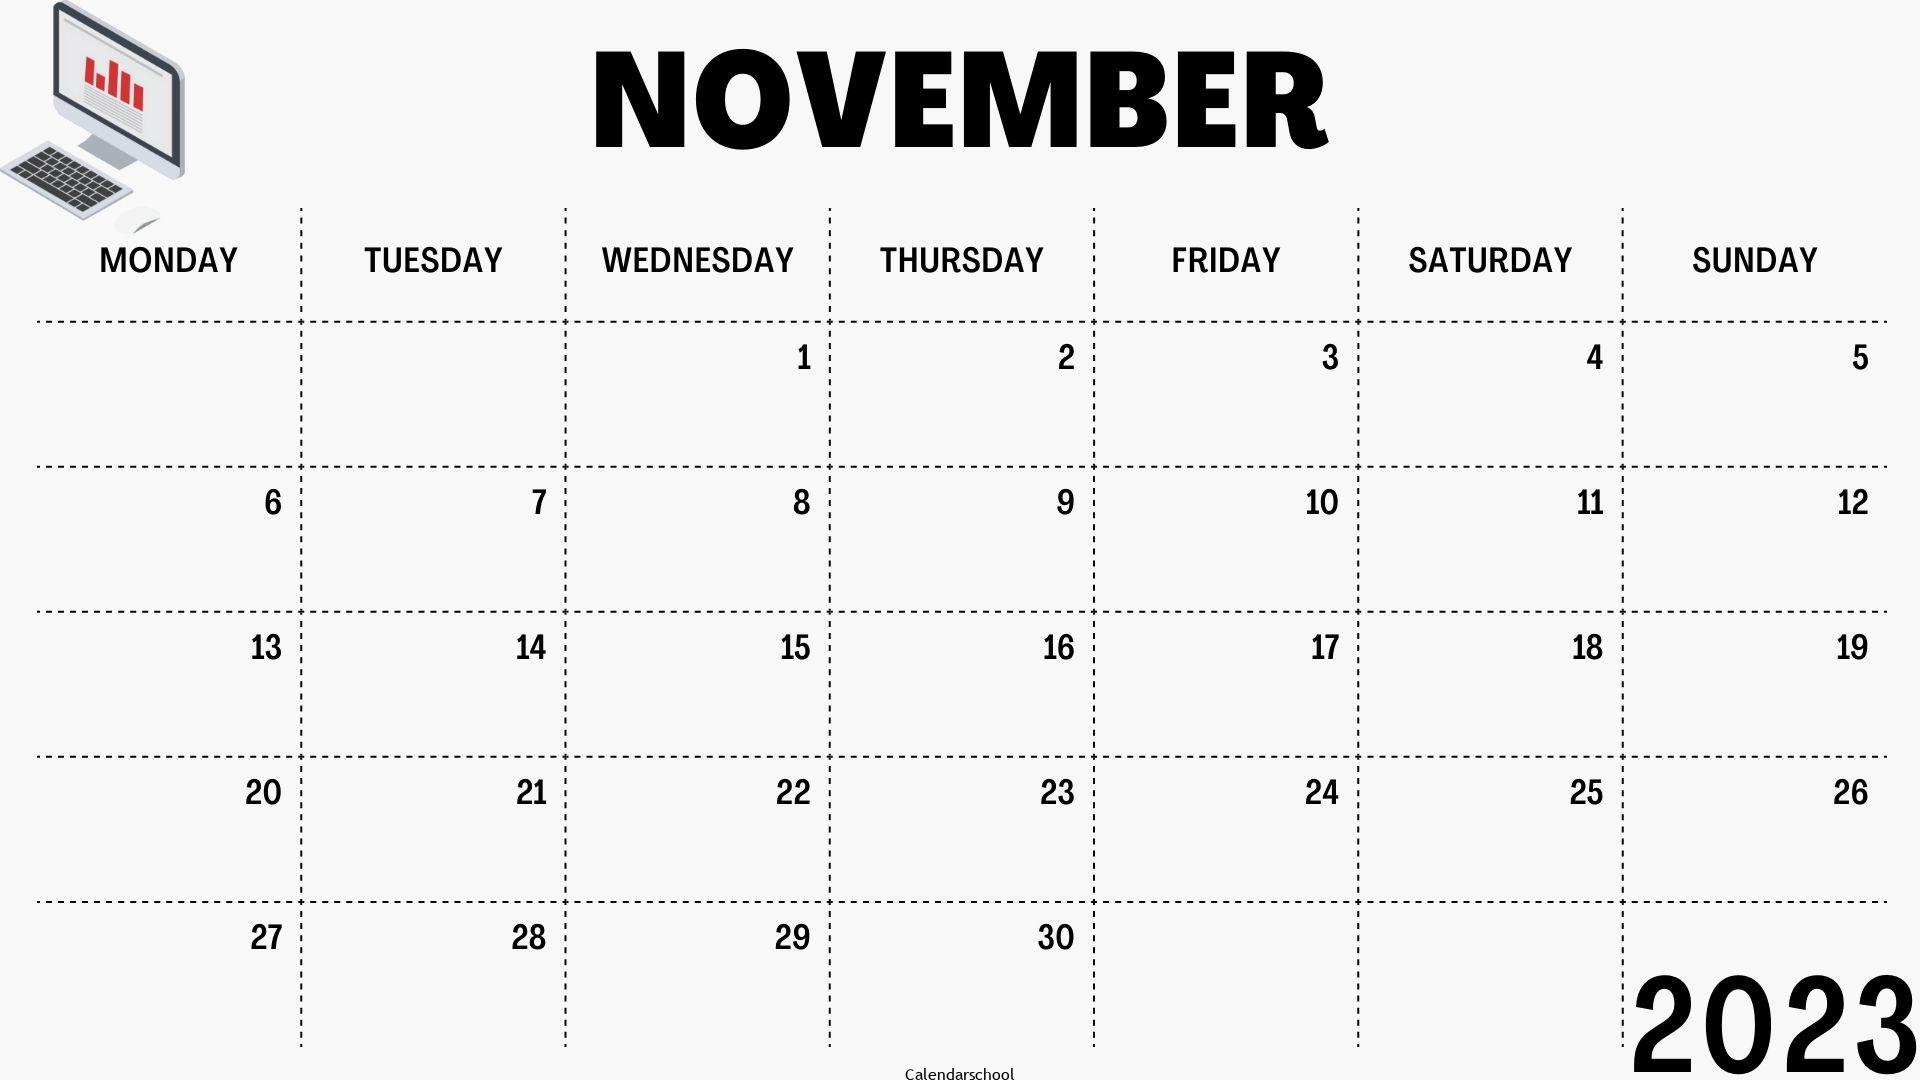 November 2023 Islamic Calendar